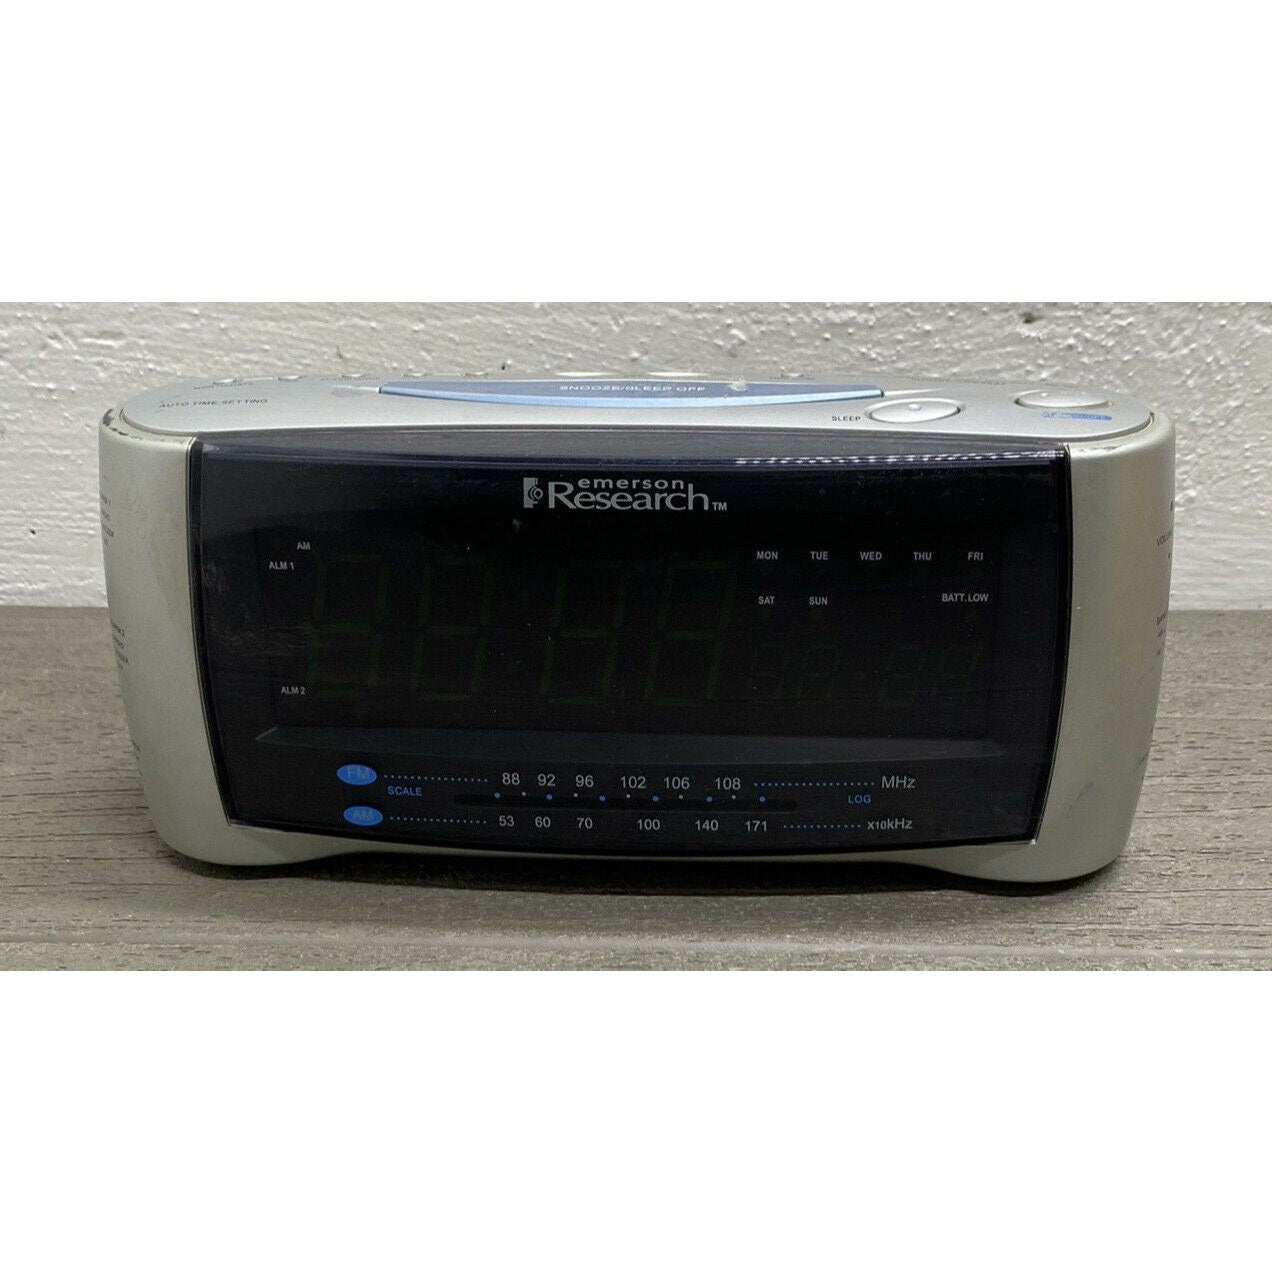 Emerson Research CKS2237 SmartSet Auto Clock Radio Alarm